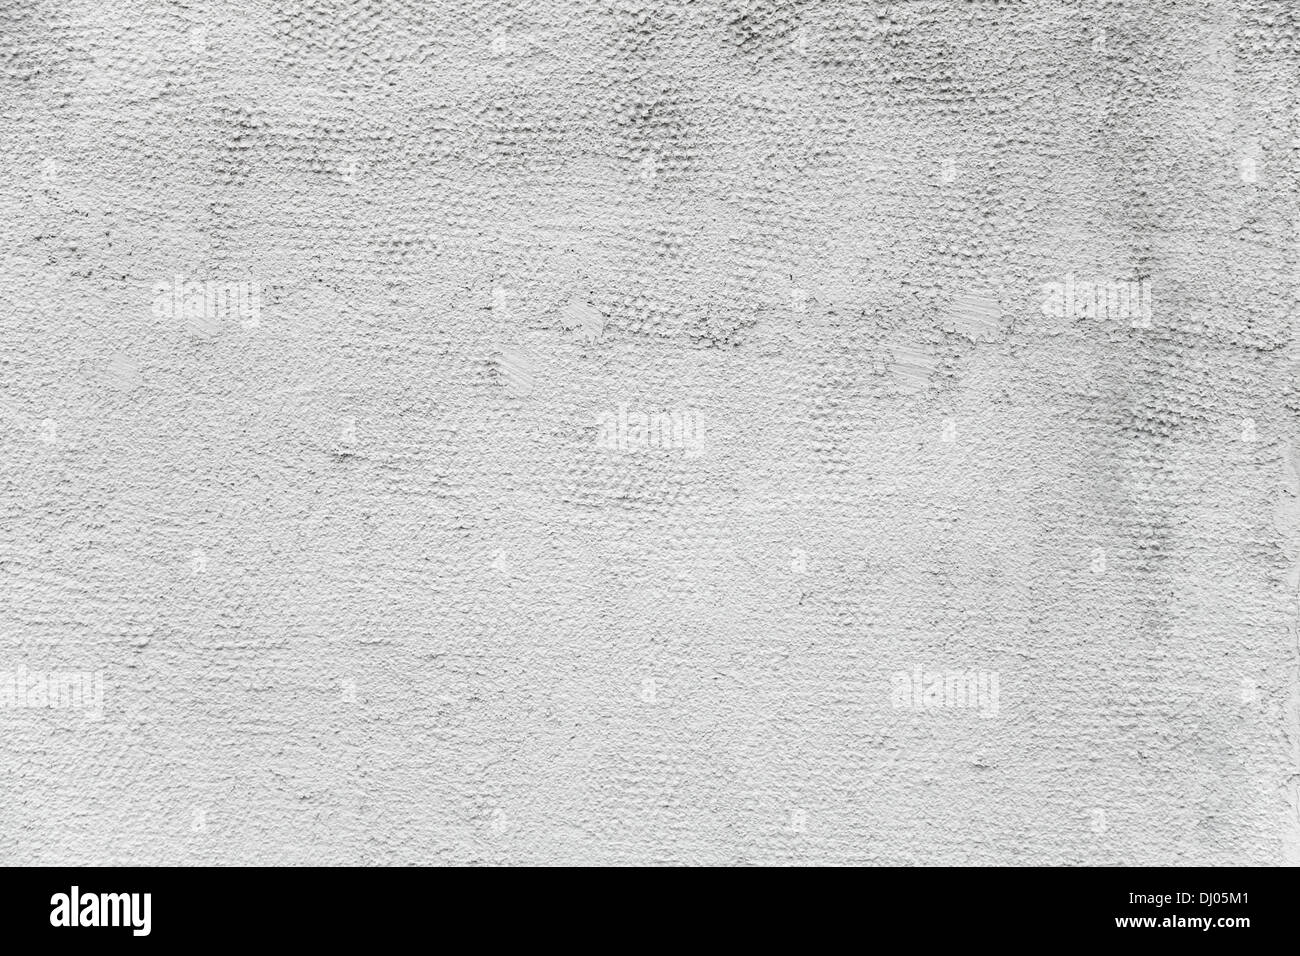 Graue Betonwand Fototextur mit Gips-Muster Stockfoto